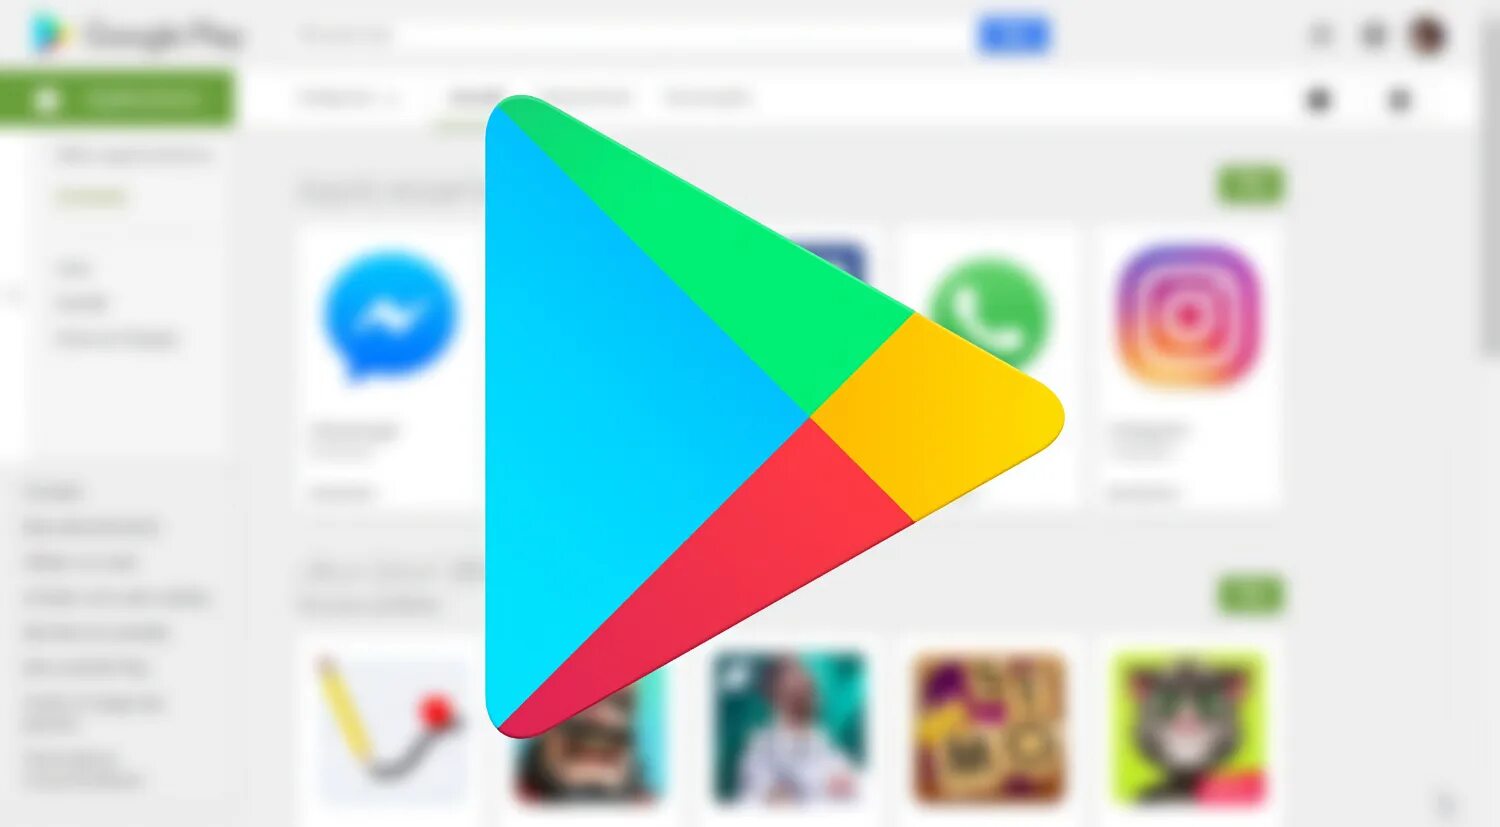 Реклама приложений в google play. Google Play Store 2012. Google Play арт. Google Play 01 2019. Реклама приложения в Google Play пример картинка.